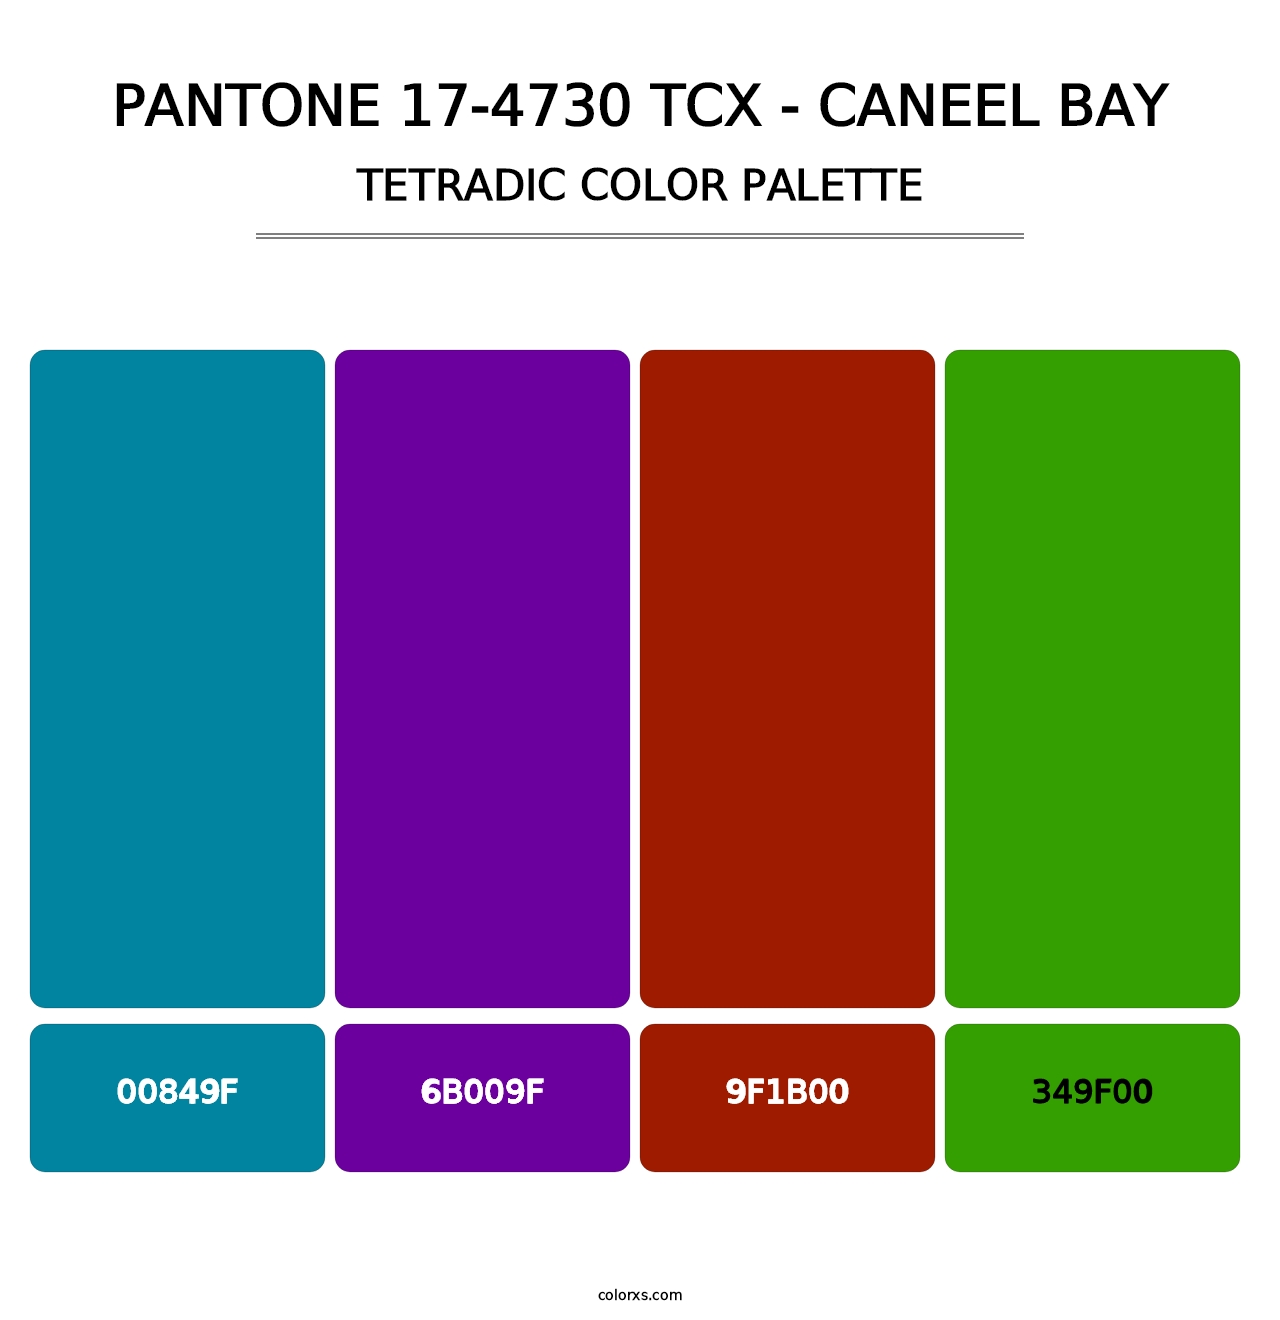 PANTONE 17-4730 TCX - Caneel Bay - Tetradic Color Palette